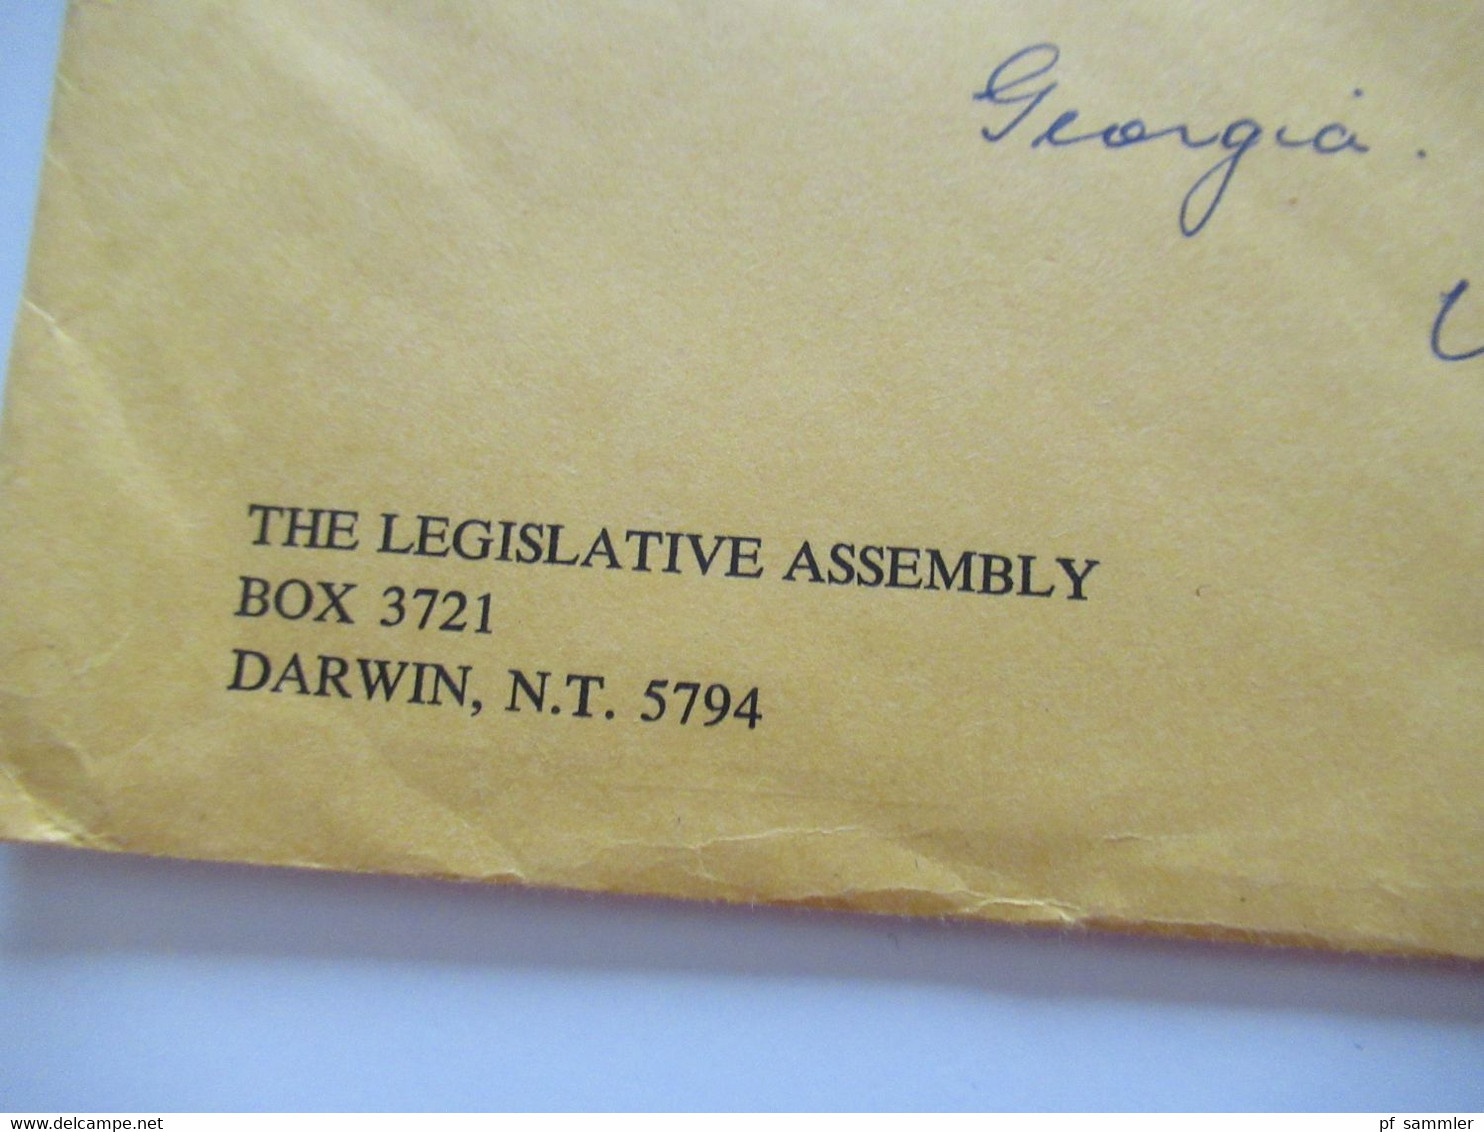 Australien 1980 Freistempel Darwin N.T. 5790 Postage Paid Air Mail Nach Atlanta USA Umschlag The Legislative Assembly - Storia Postale